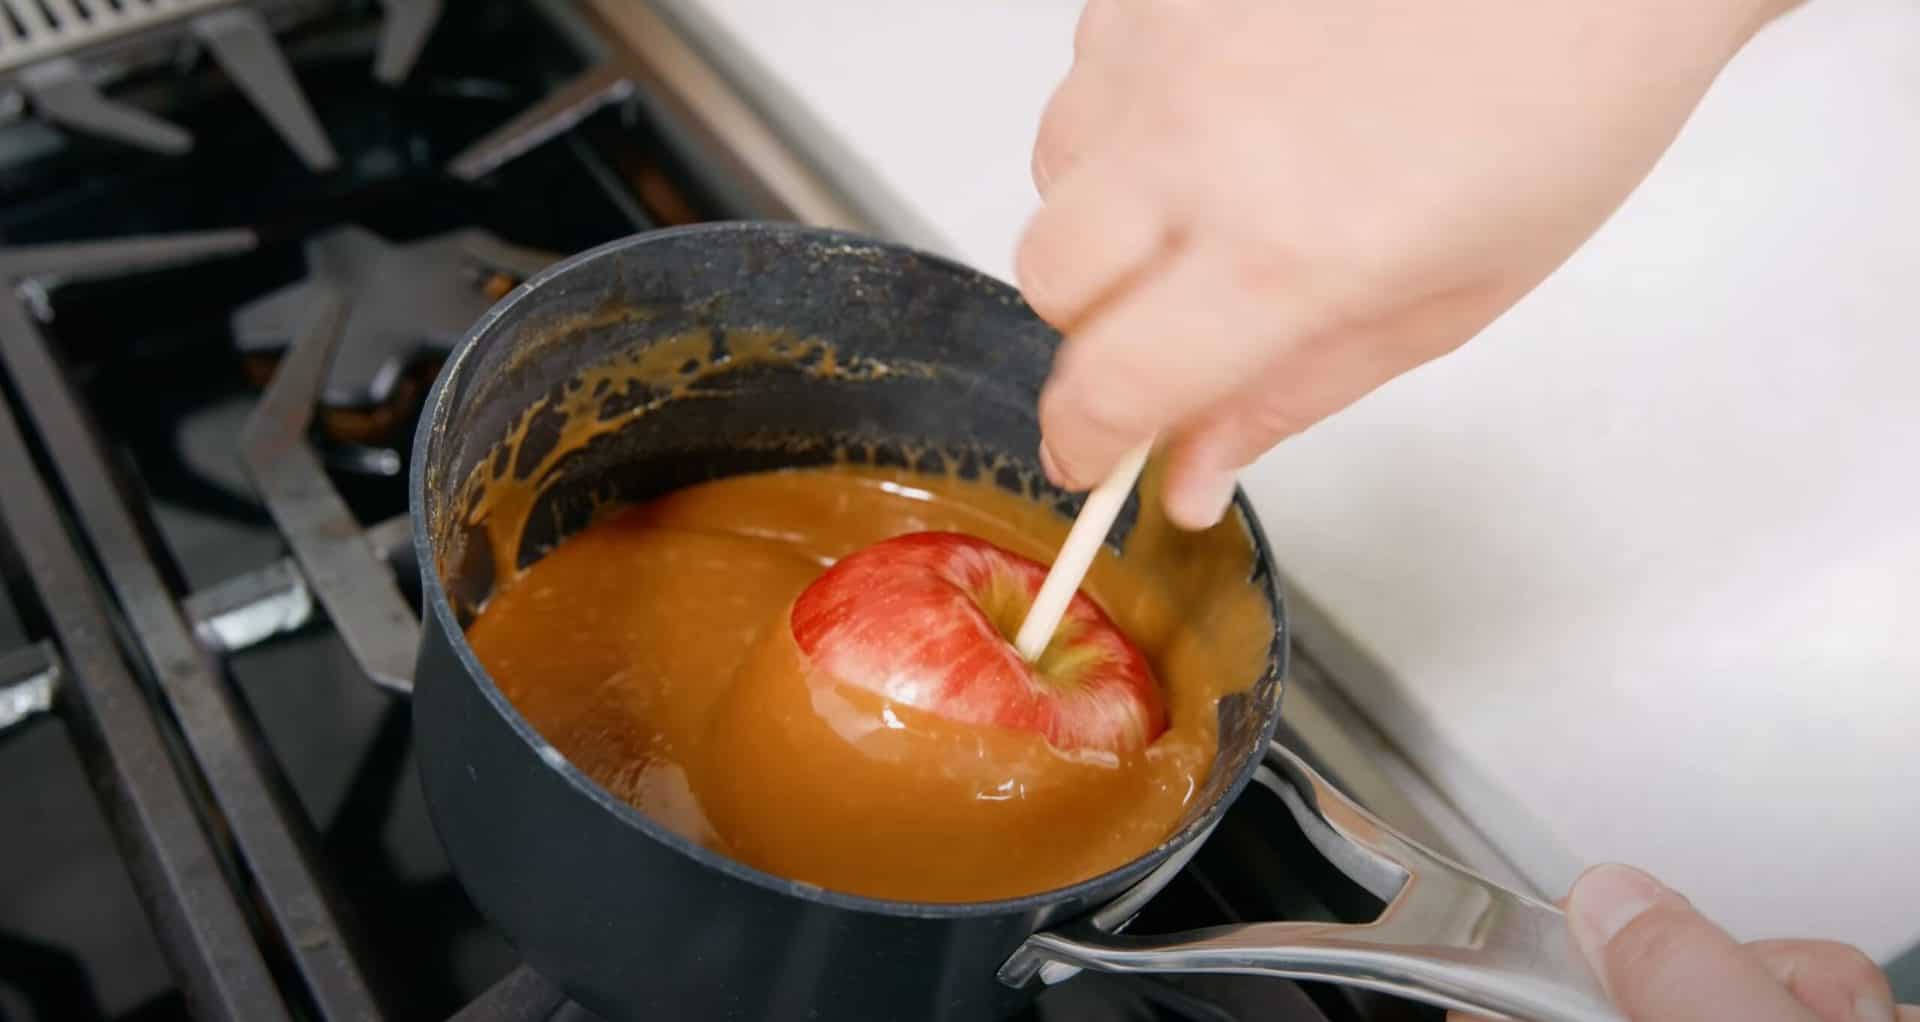 Caramel Apples - step 2 dip